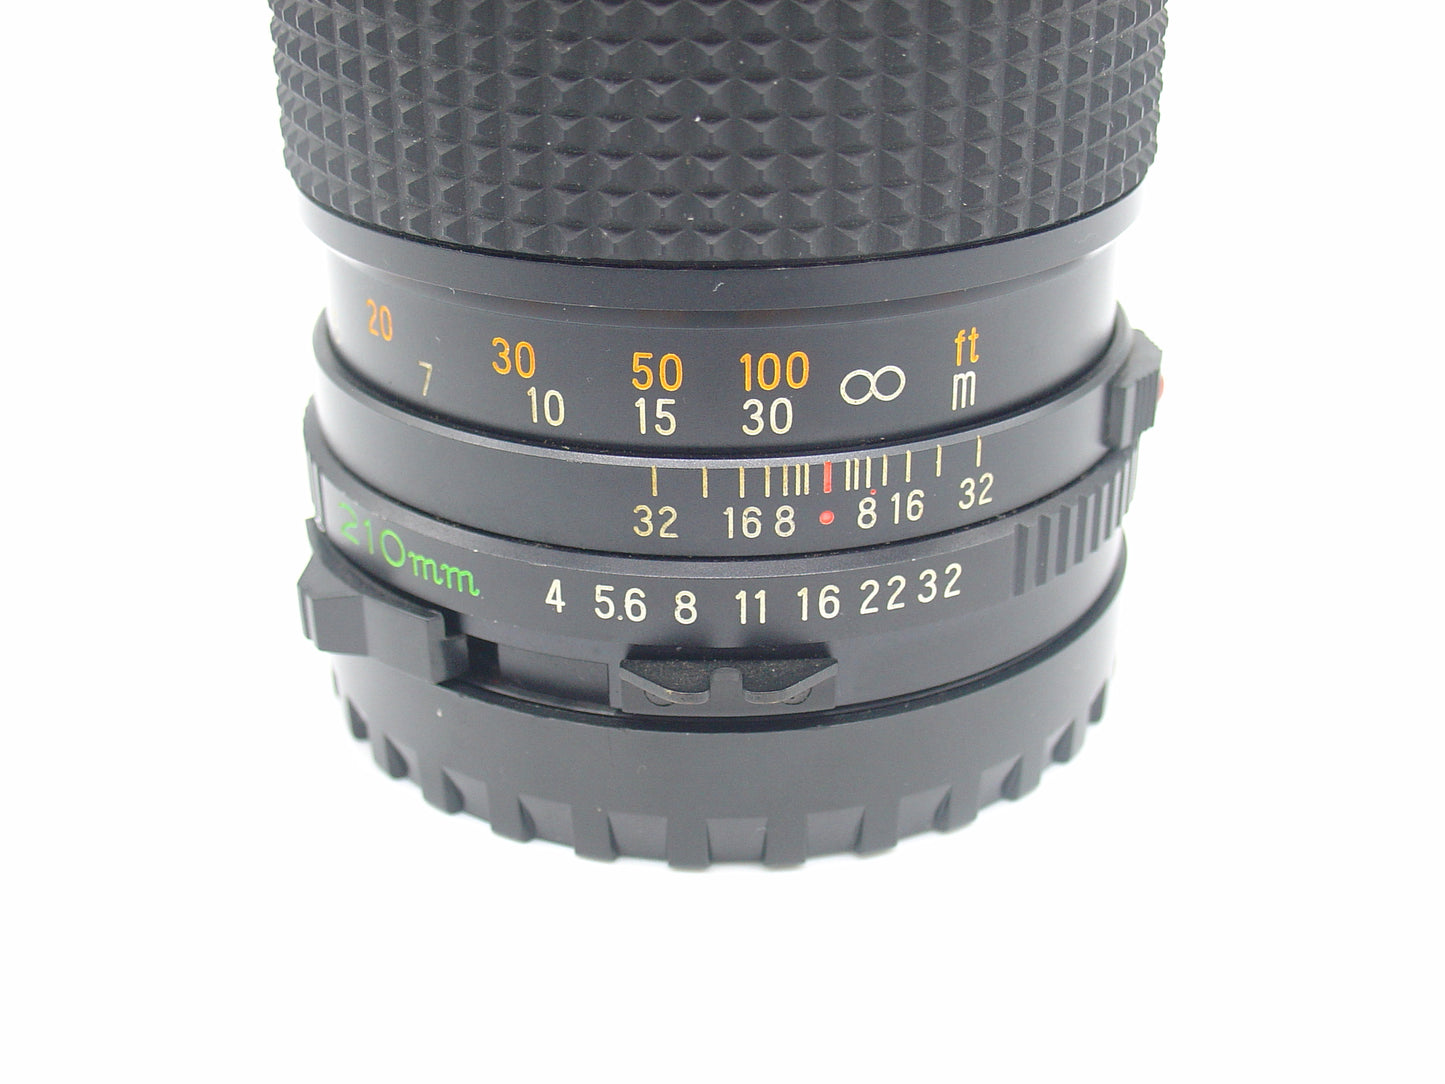 Mamiya 210mm f4 lens for Mamiya 645